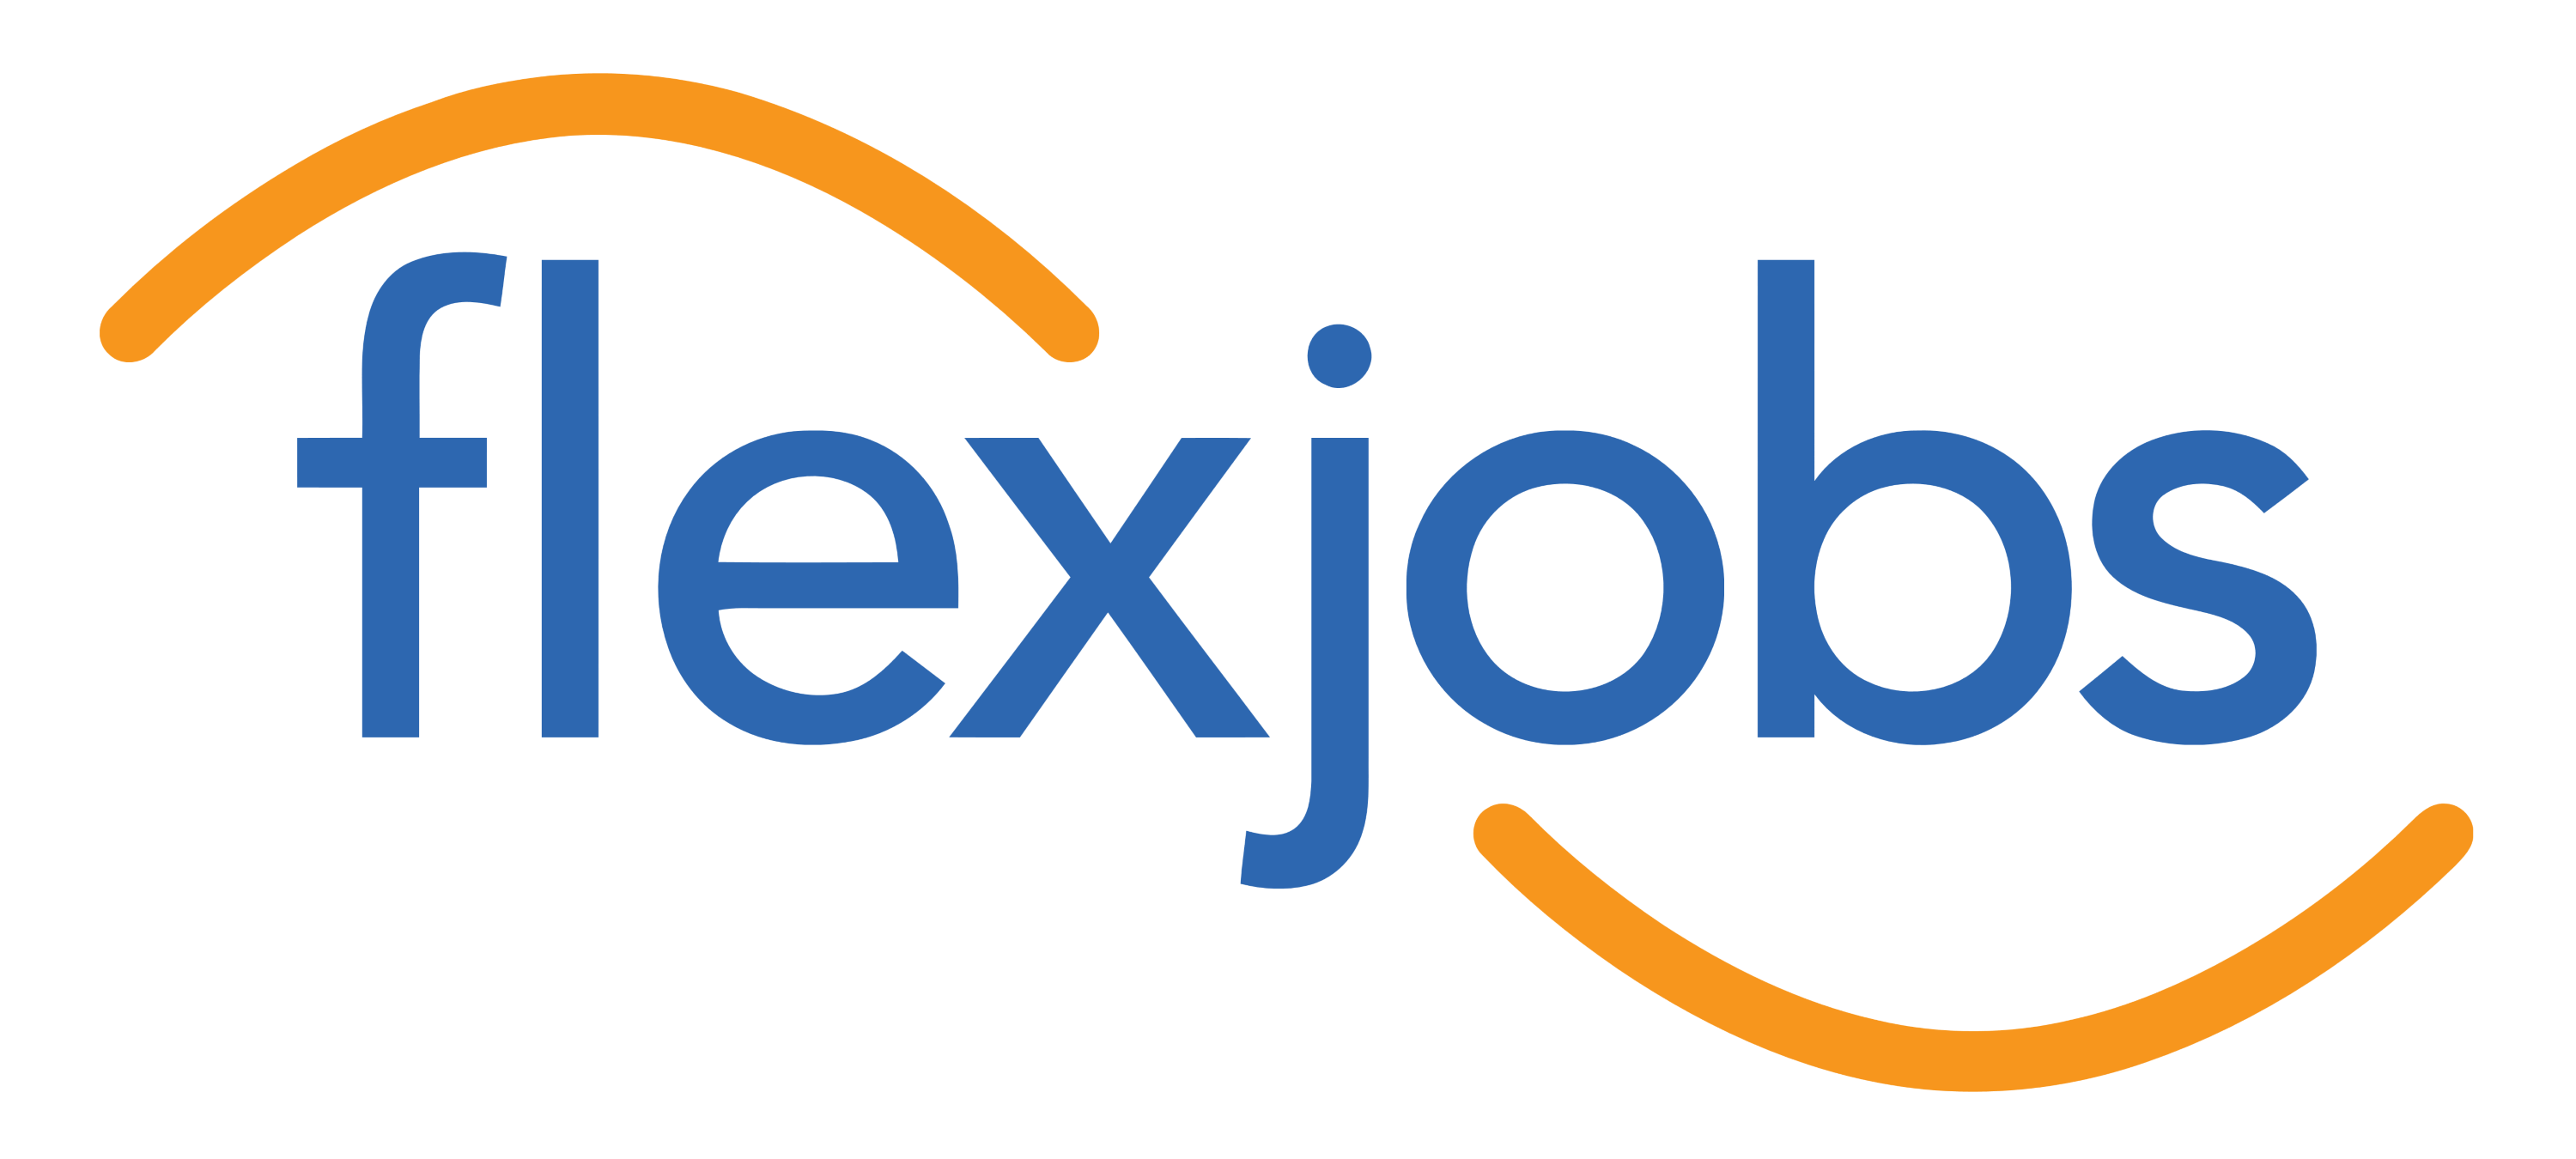 FlexJobs logo, logotype